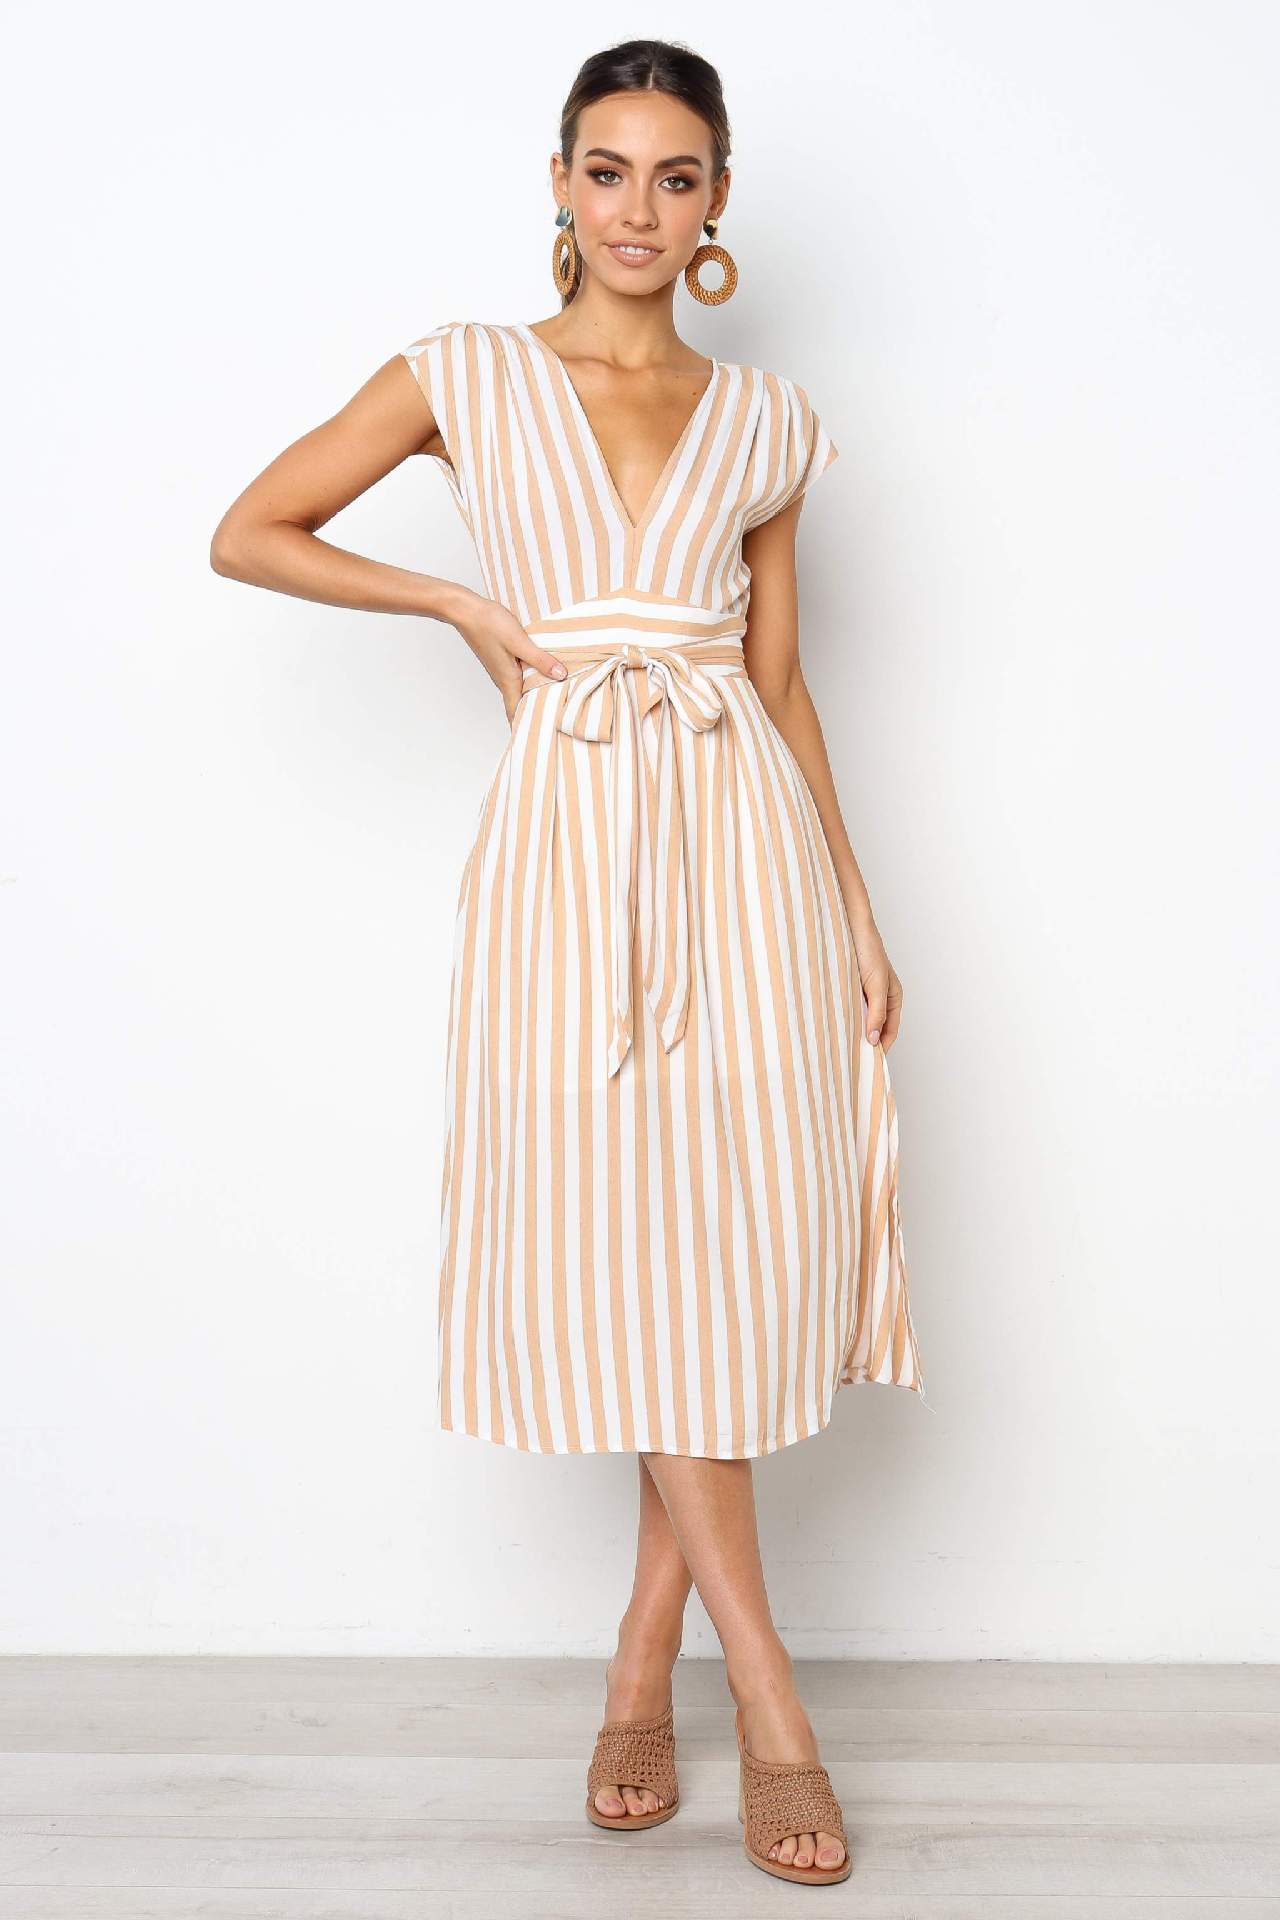 Women's Dresses Spring Summer Dress 2019 Vestidos Women Casual Stripe Printing Off Shoulder Sleeveless Dress Princess Dress